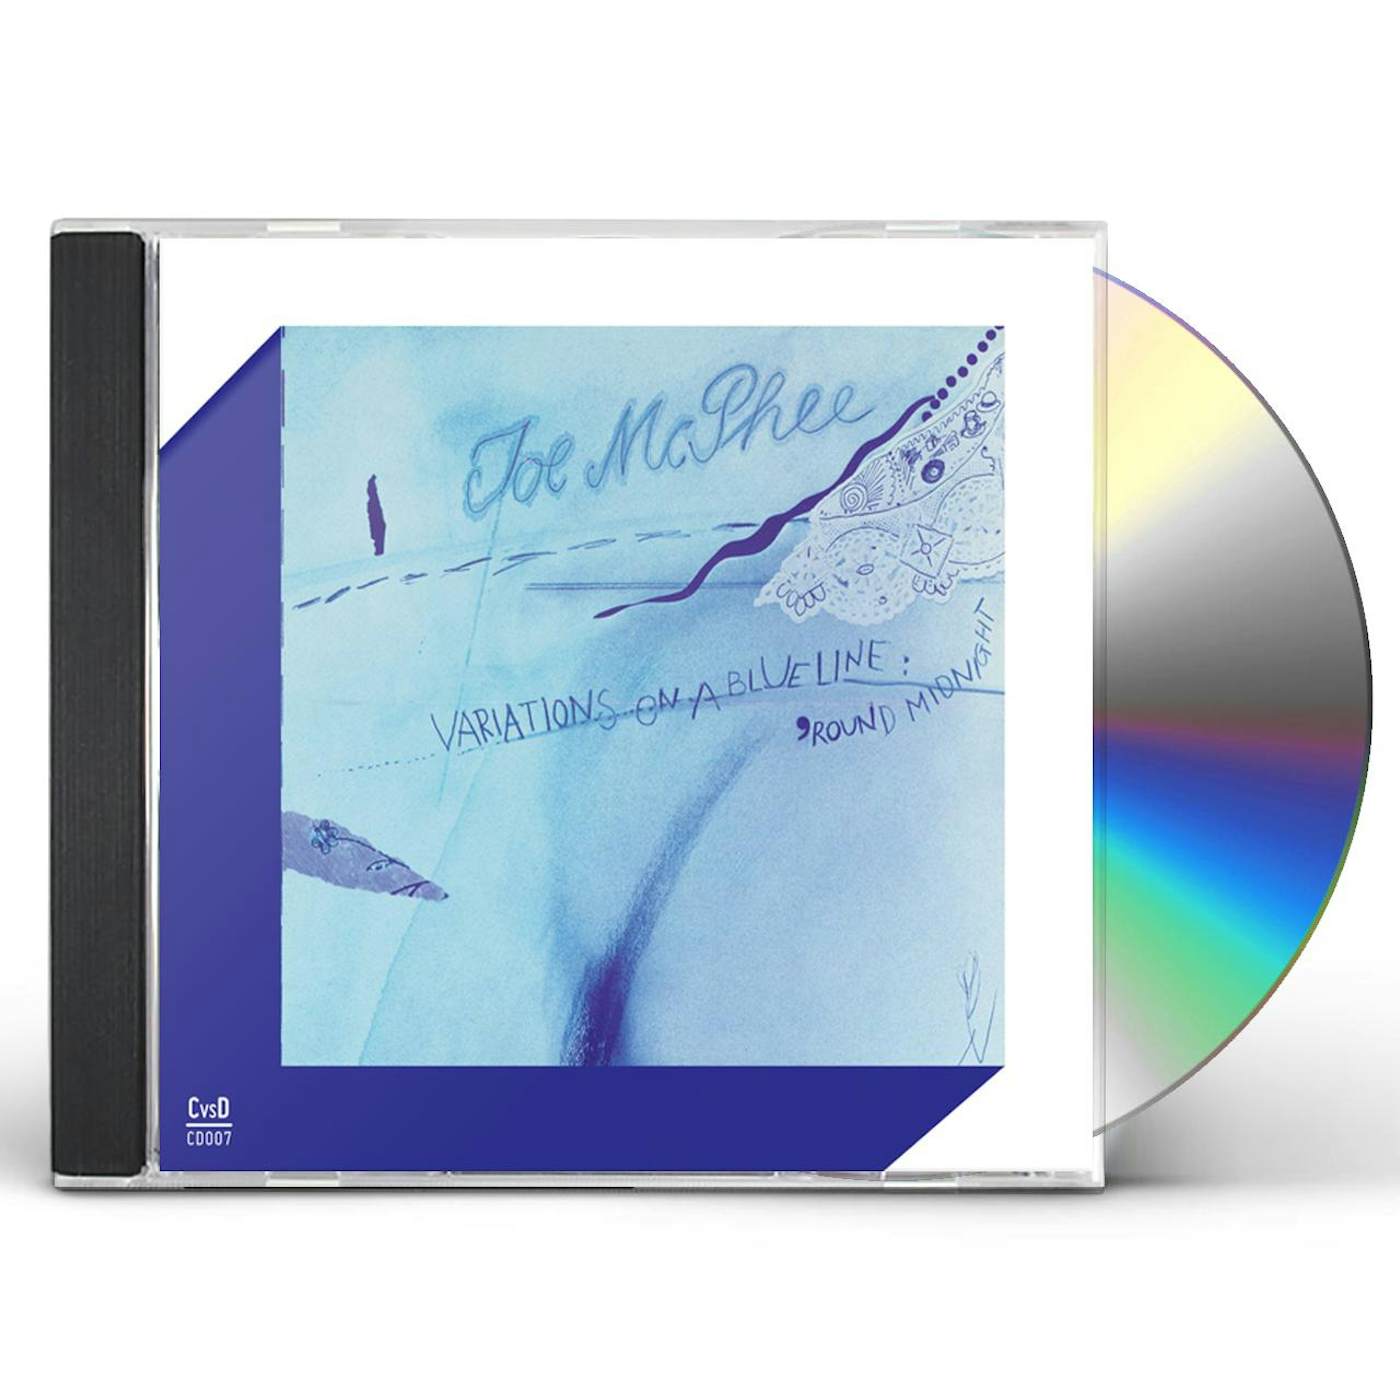 Joe Mcphee VARIATIONS ON A BLUE LINE / 'ROUND MIDNIGHT CD